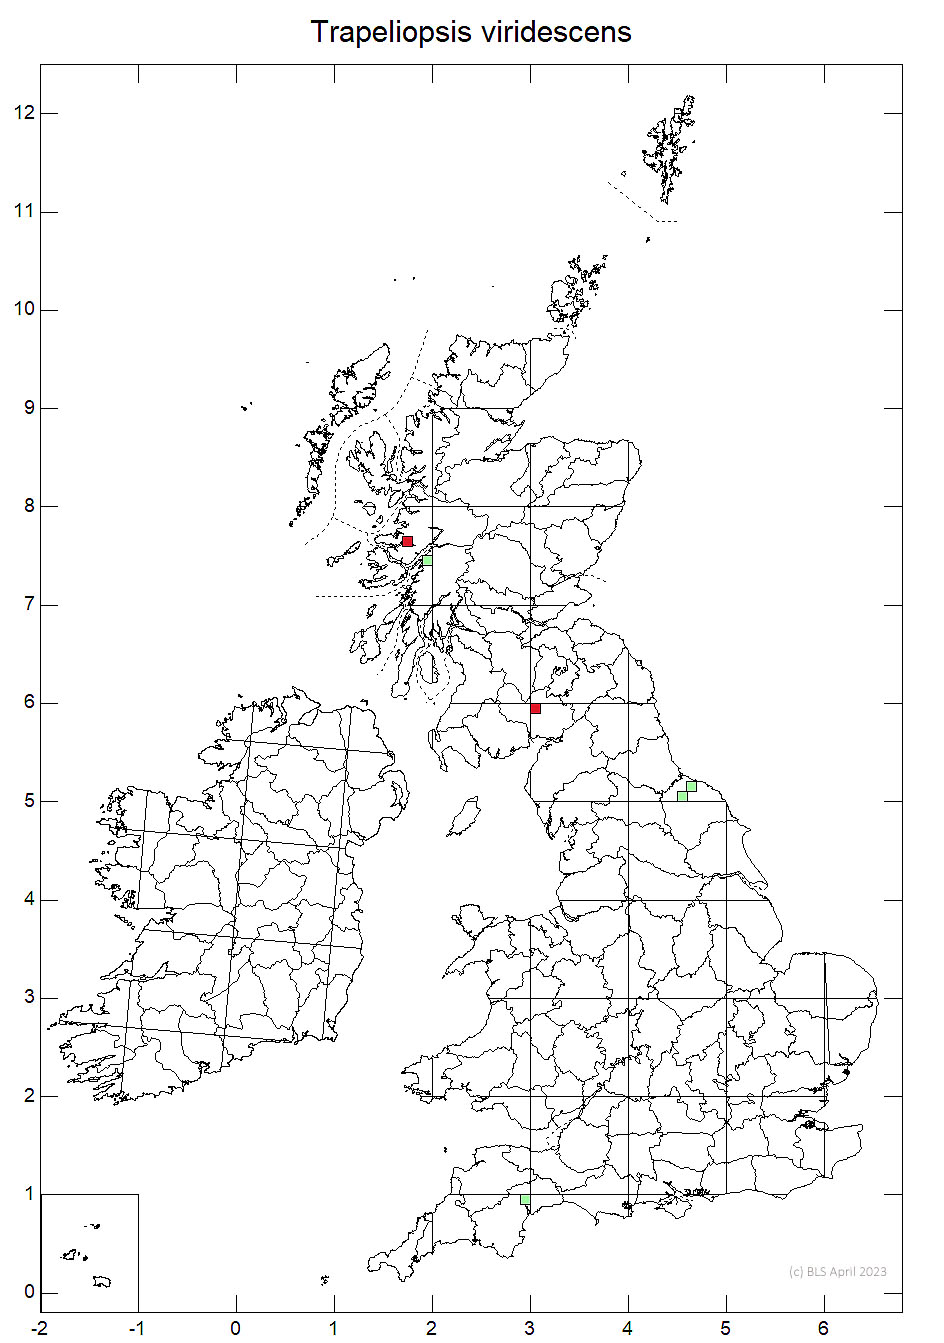 Trapeliopsis viridescens 10km sq distribution map